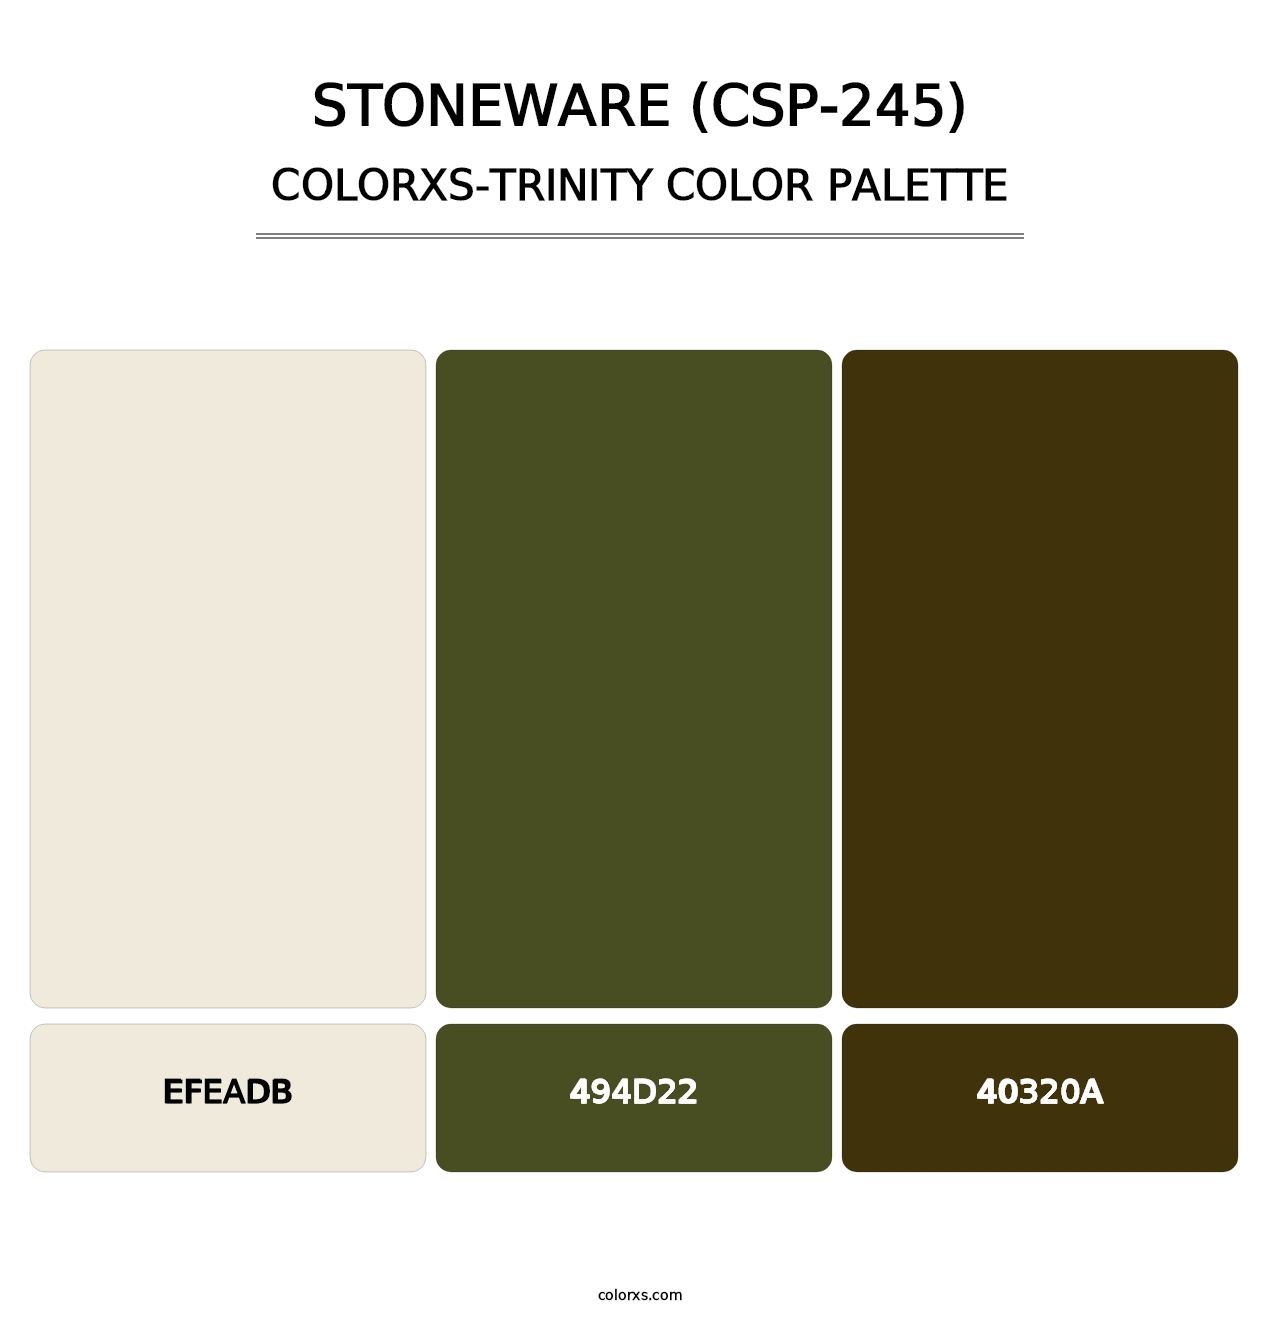 Stoneware (CSP-245) - Colorxs Trinity Palette